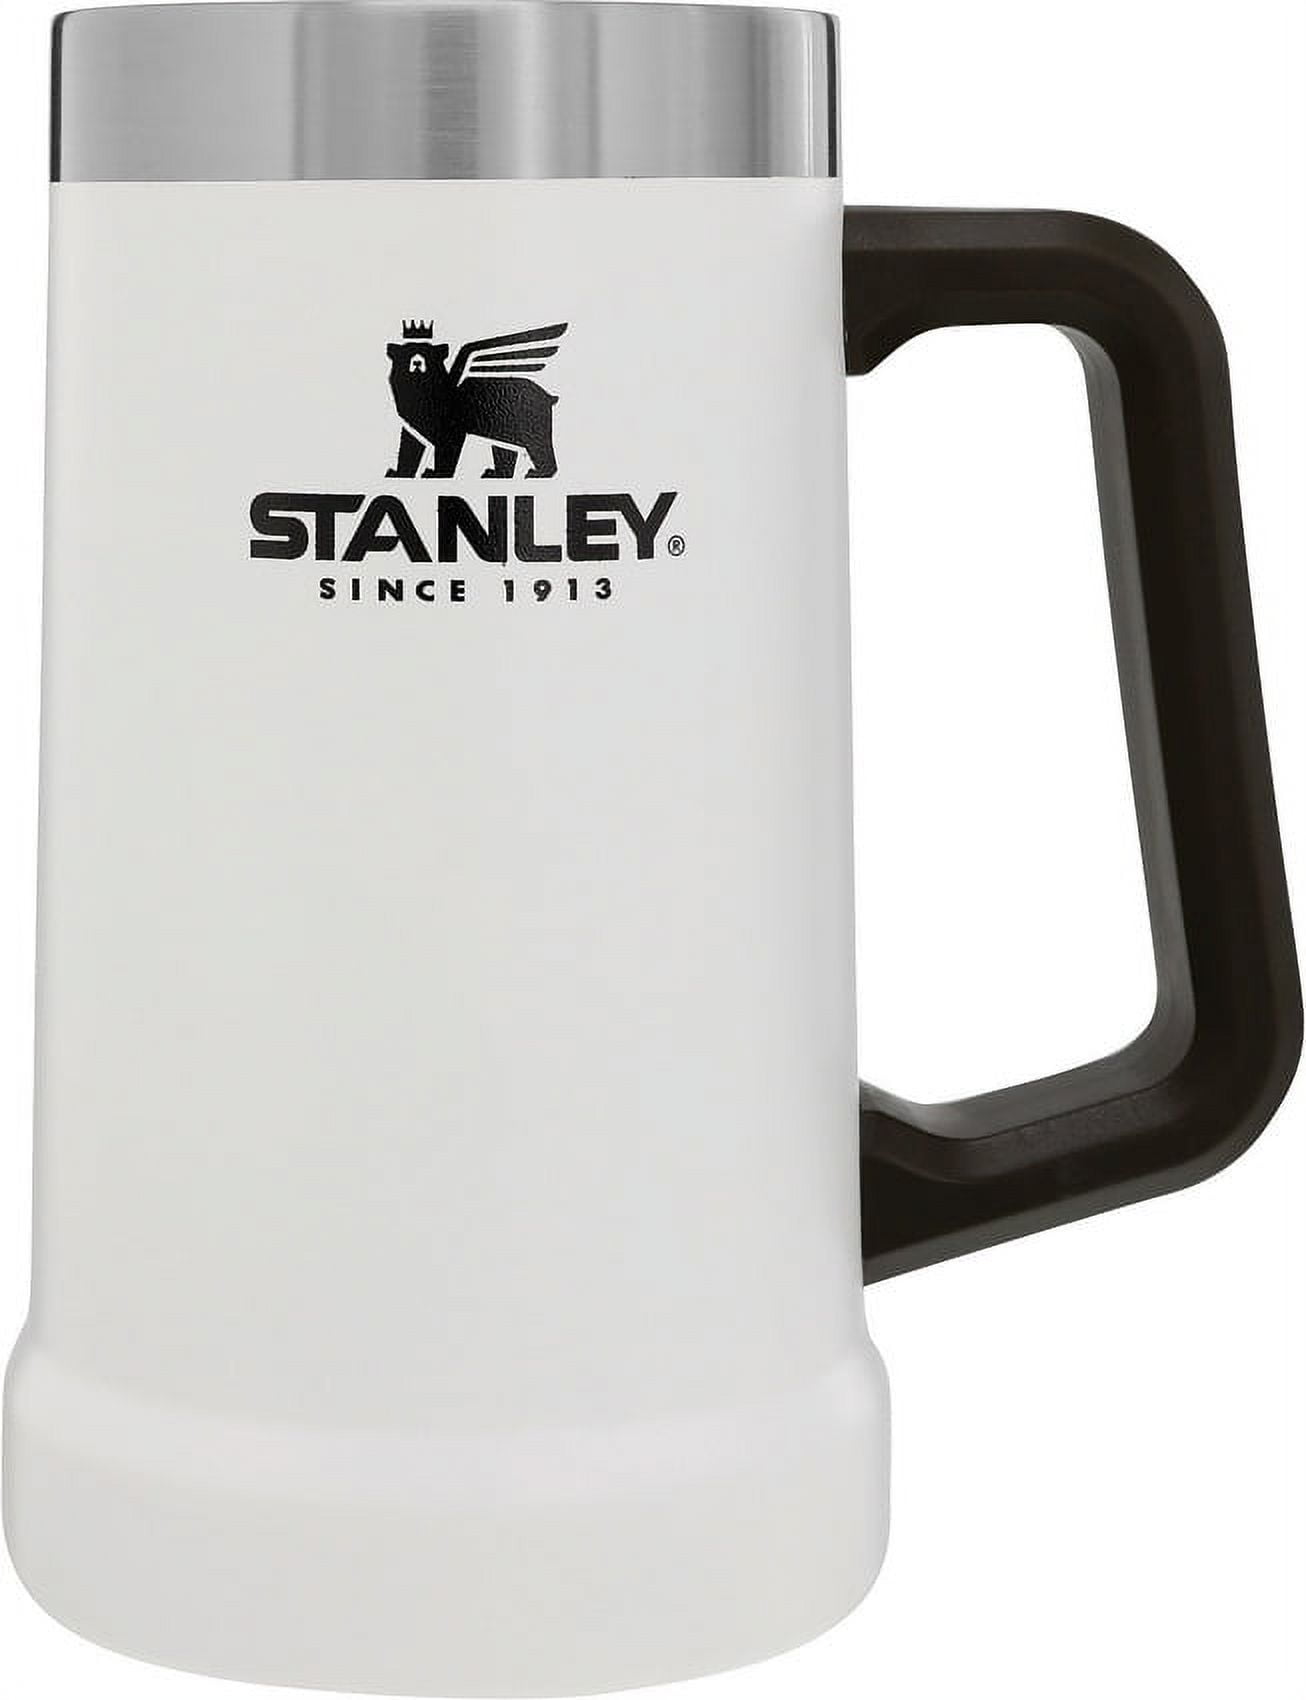 Stanley Classic Trigger Action Mug 16oz - Rose Quartz Glow